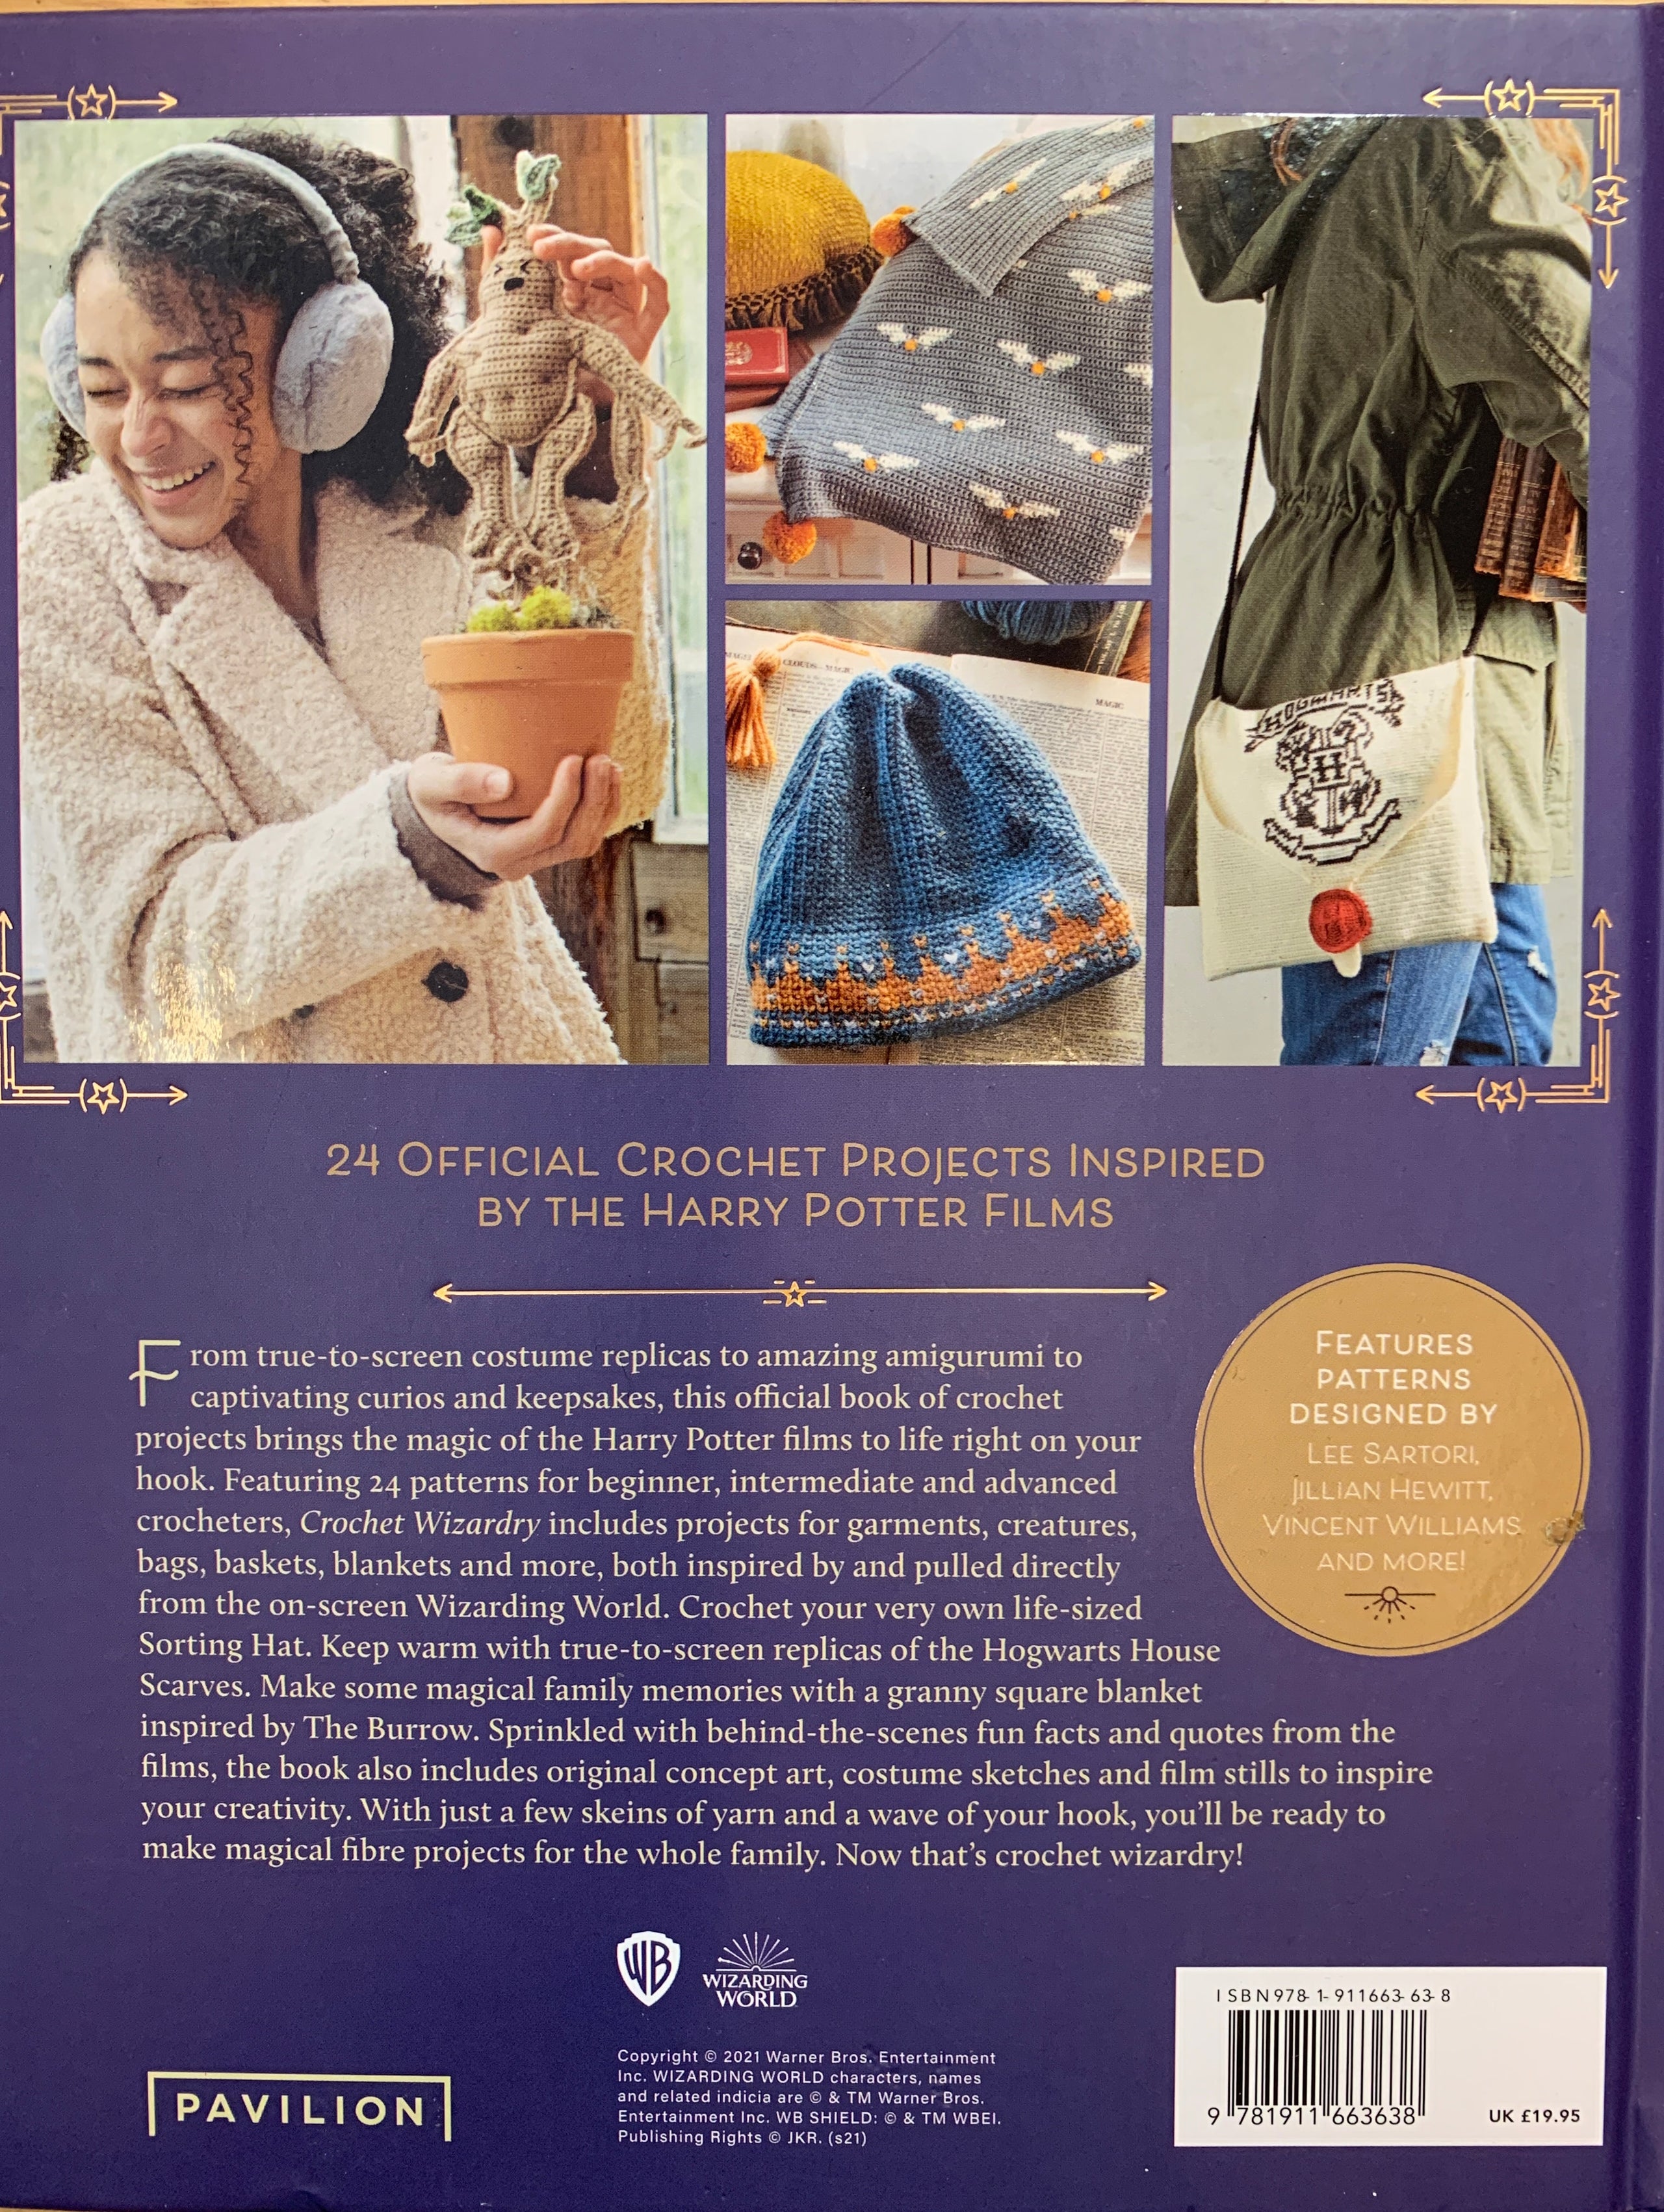 Harry Potter Crochet Wizardry - The Official Harry Potter Crochet Book